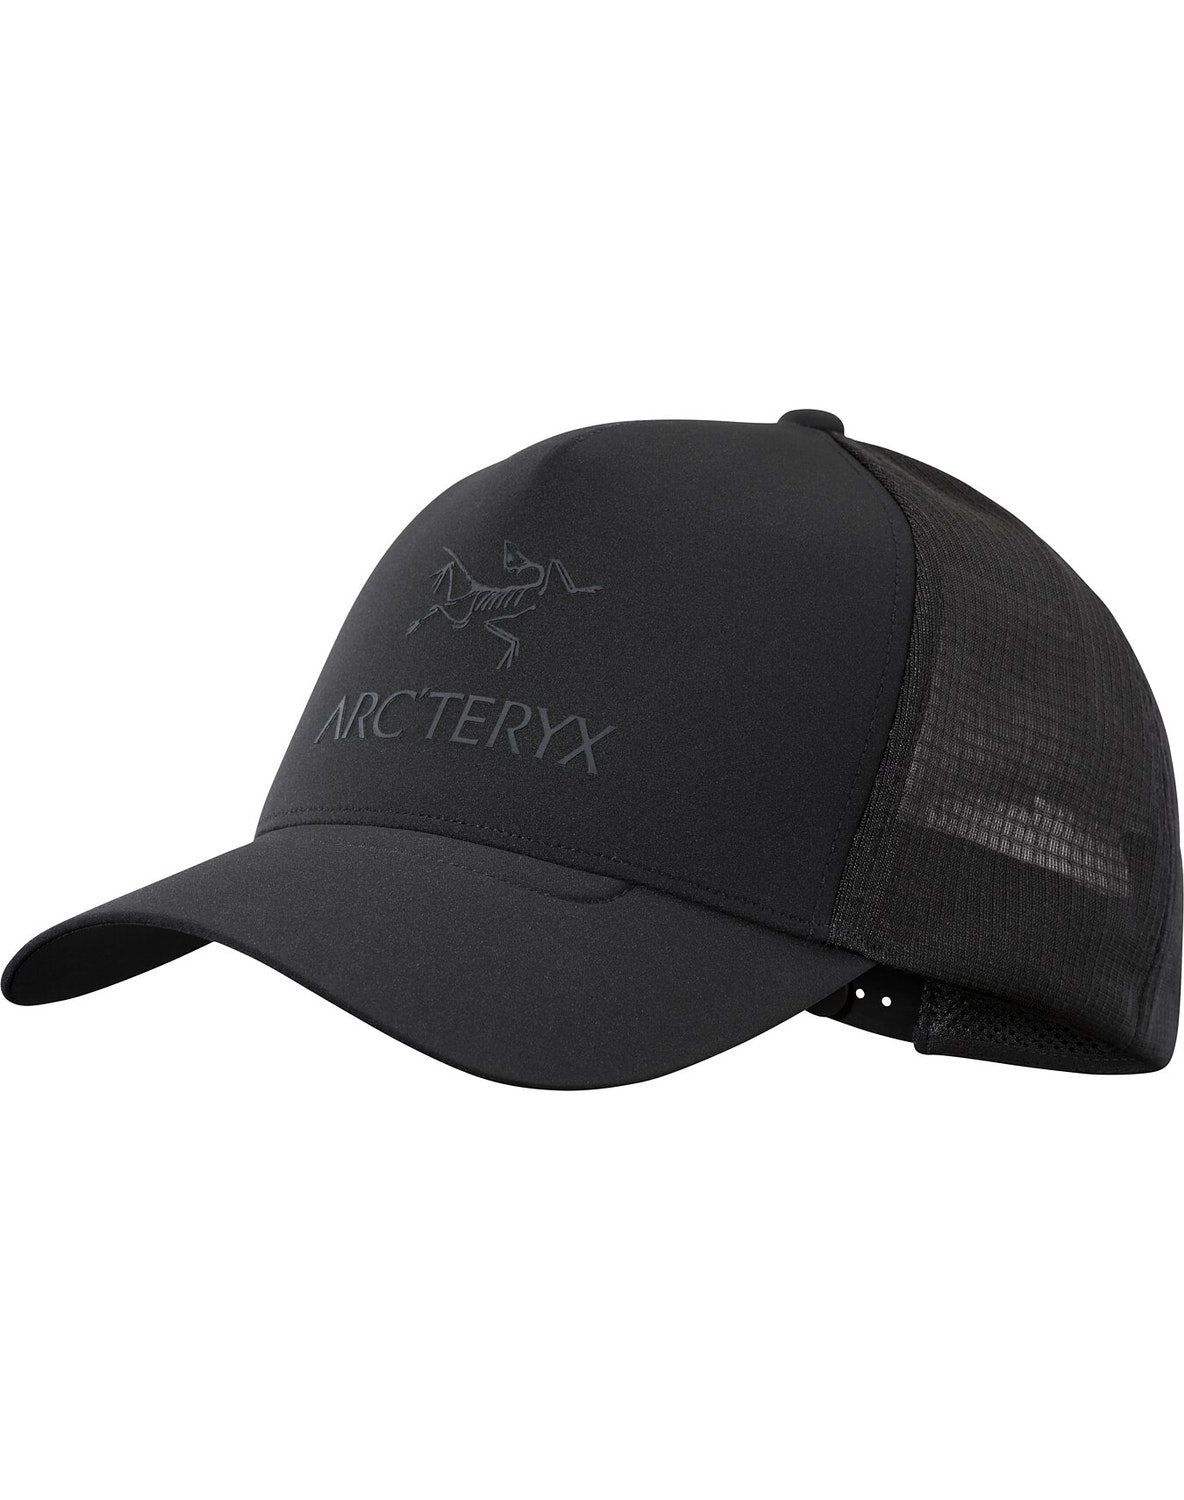 Hats Arc'teryx Logo Uomo Nere - IT-961379